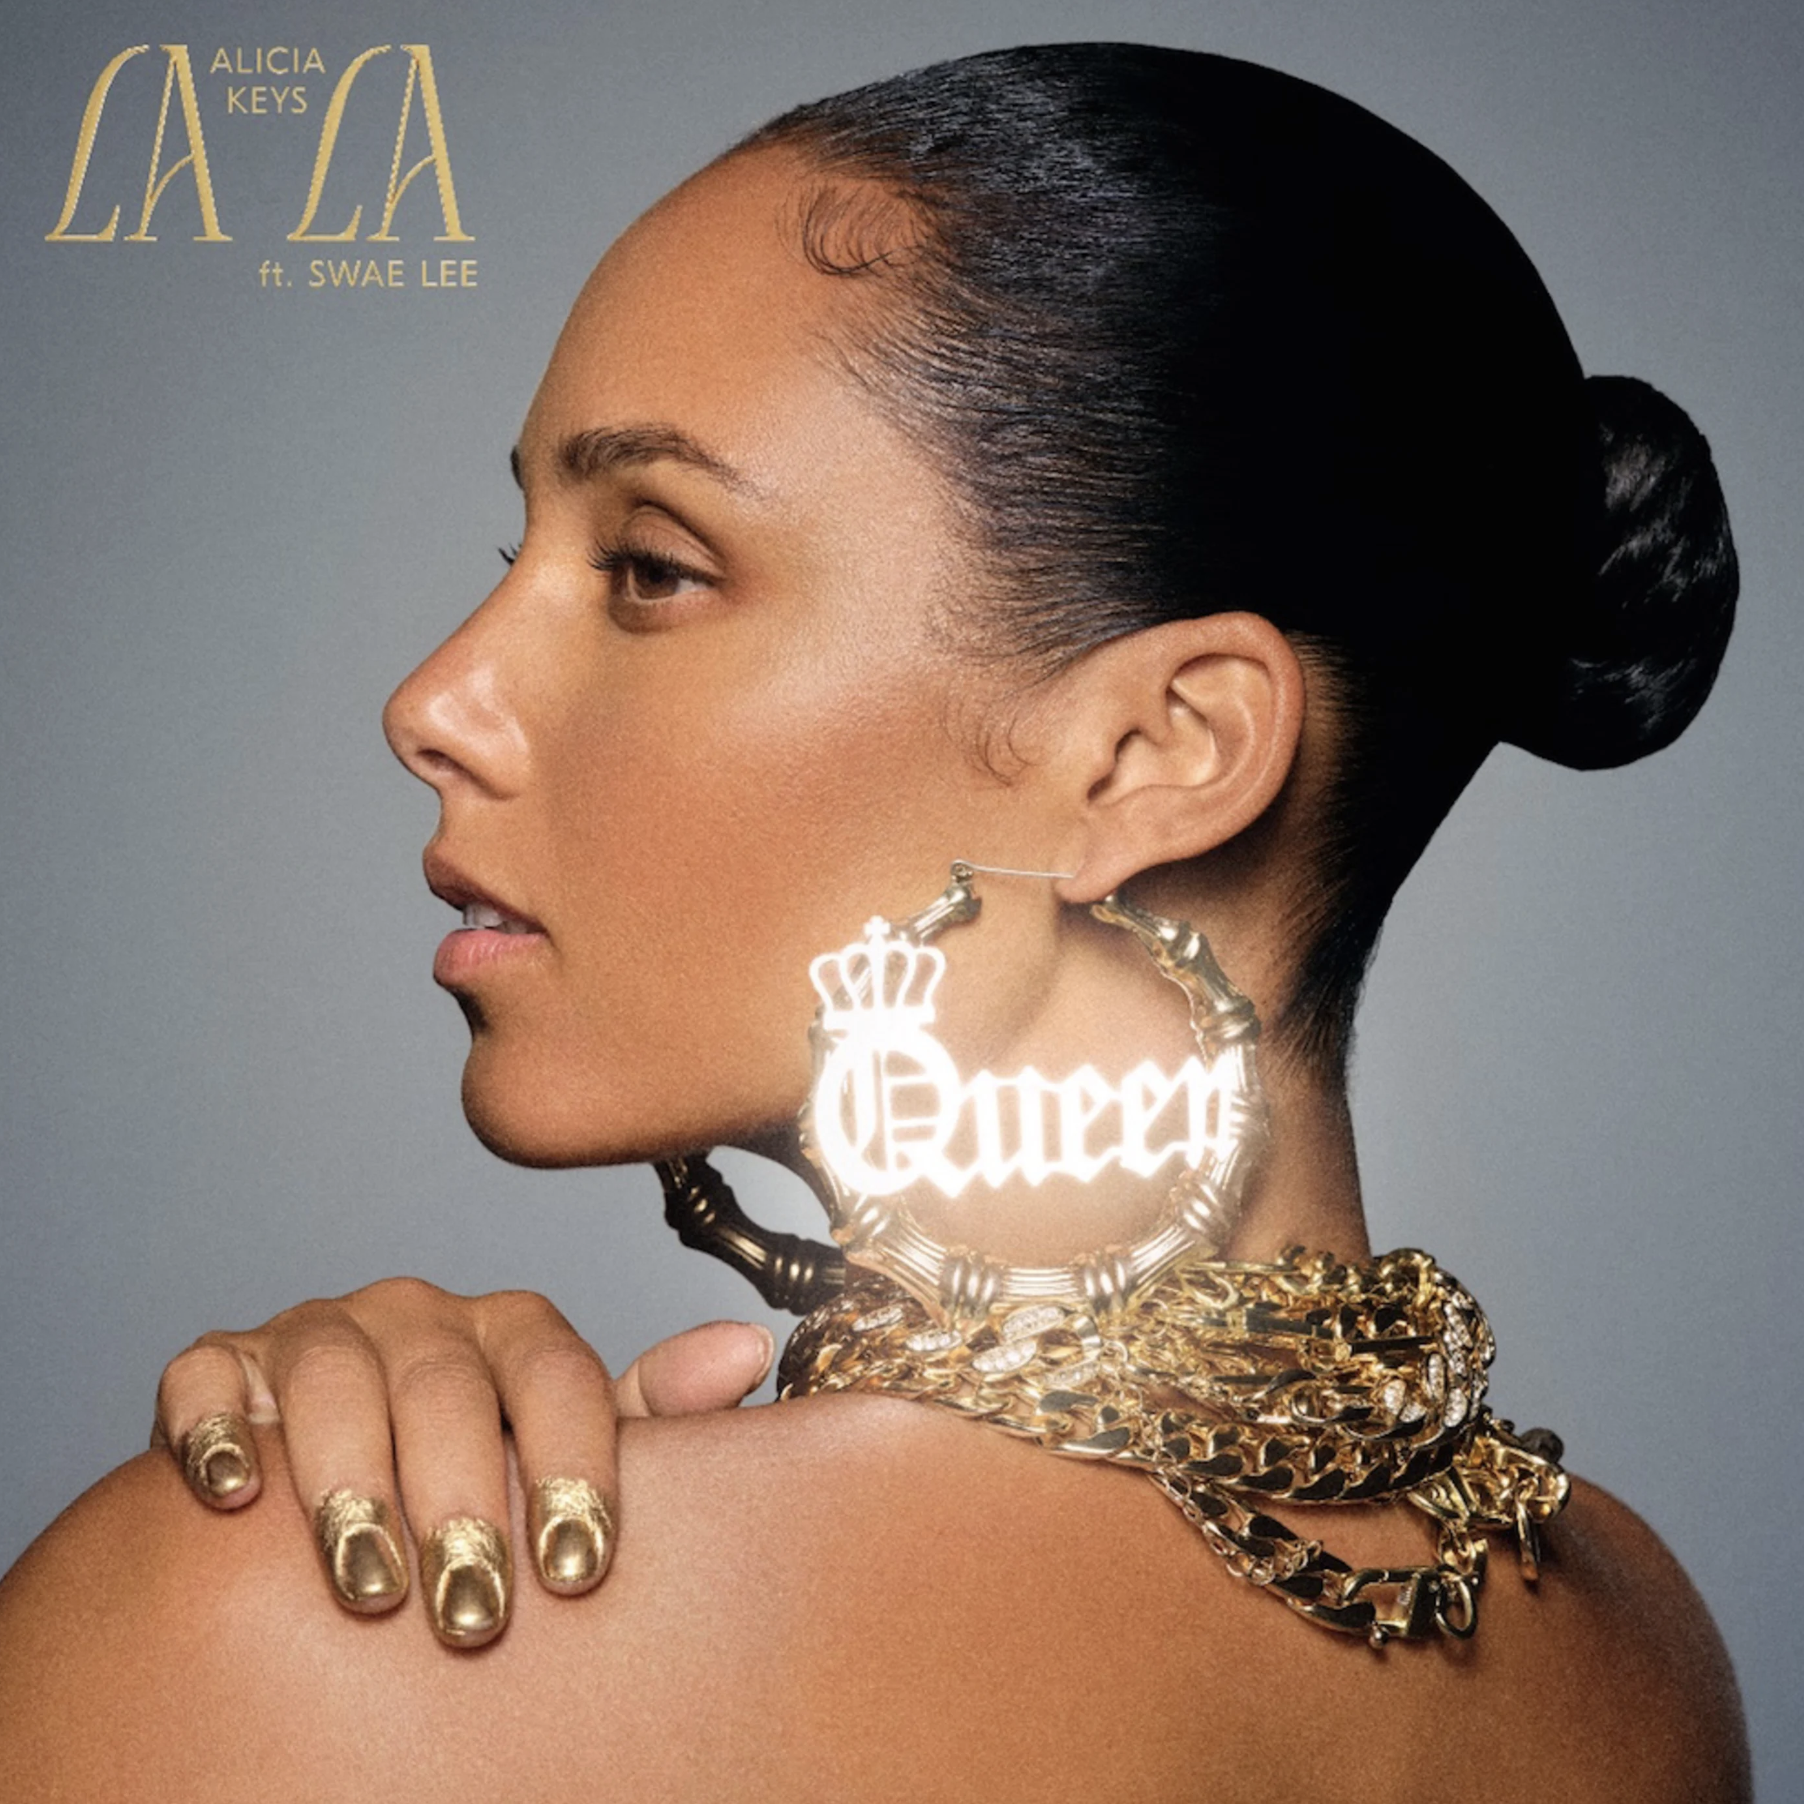 Stream Alicia Keys' new record 'LALA (Unlocked)' featuring Swae 